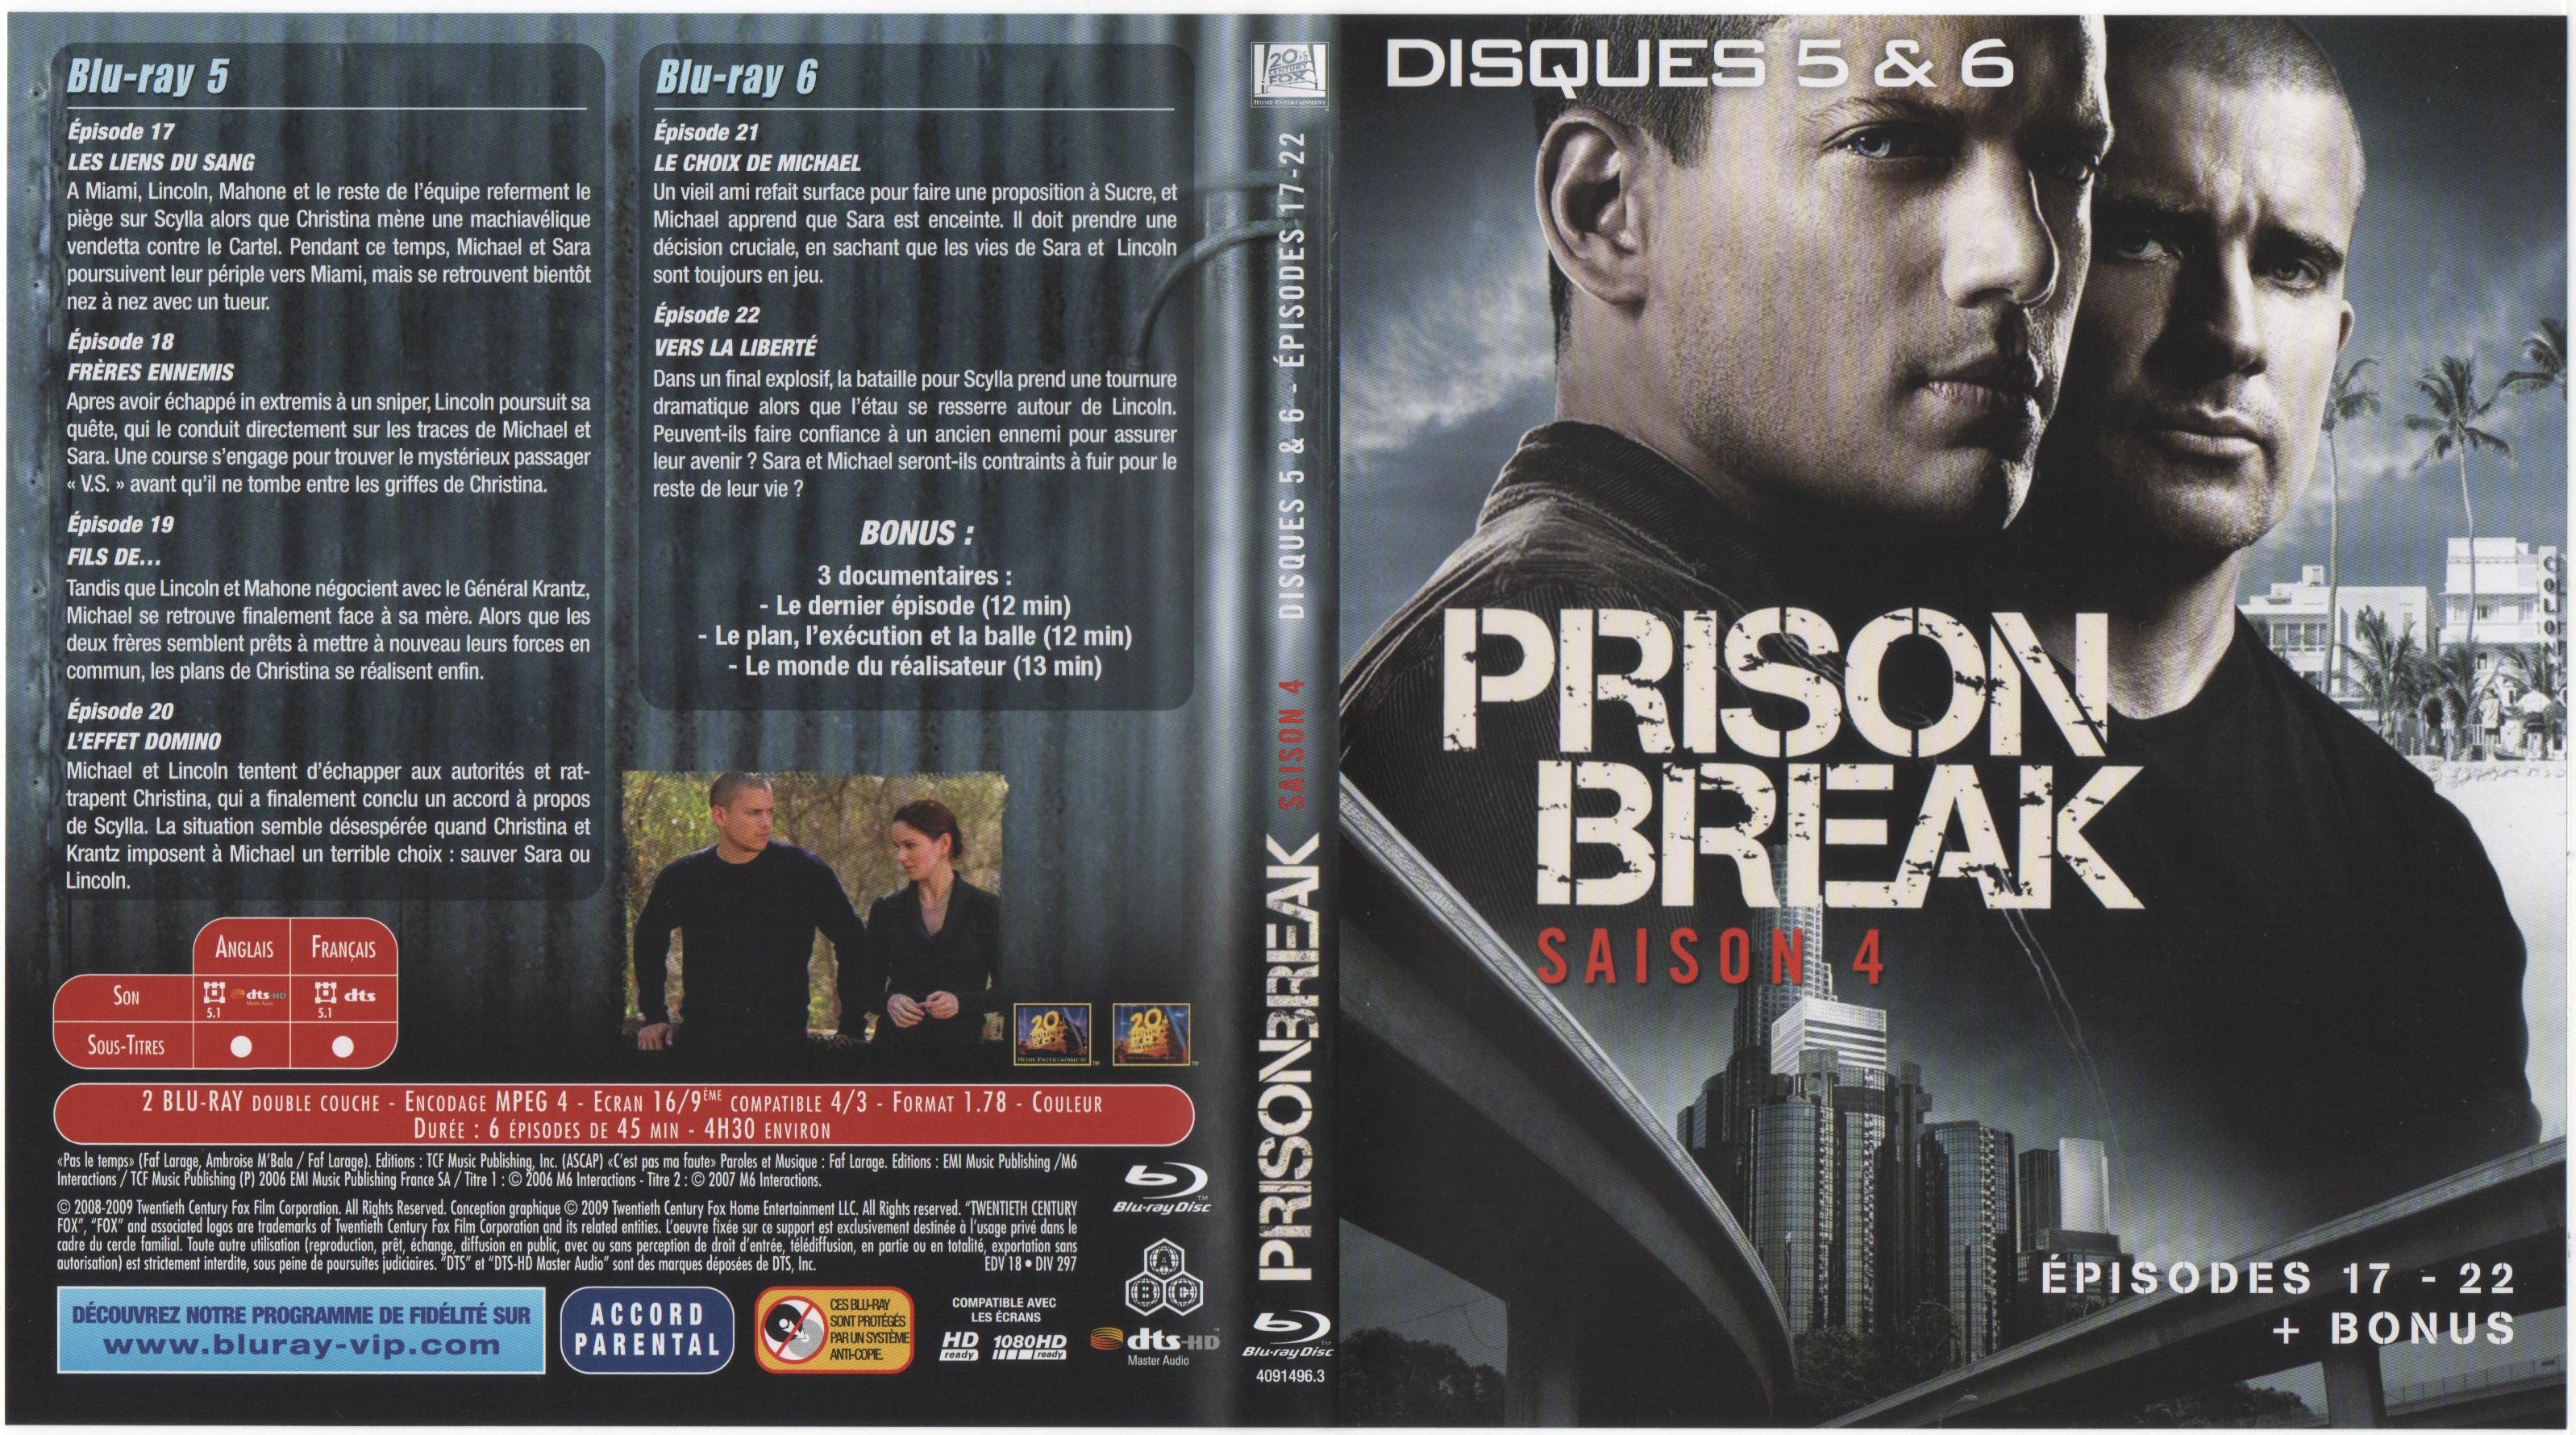 Jaquette DVD Prison break Saison 4 DVD 3 (BLU-RAY)